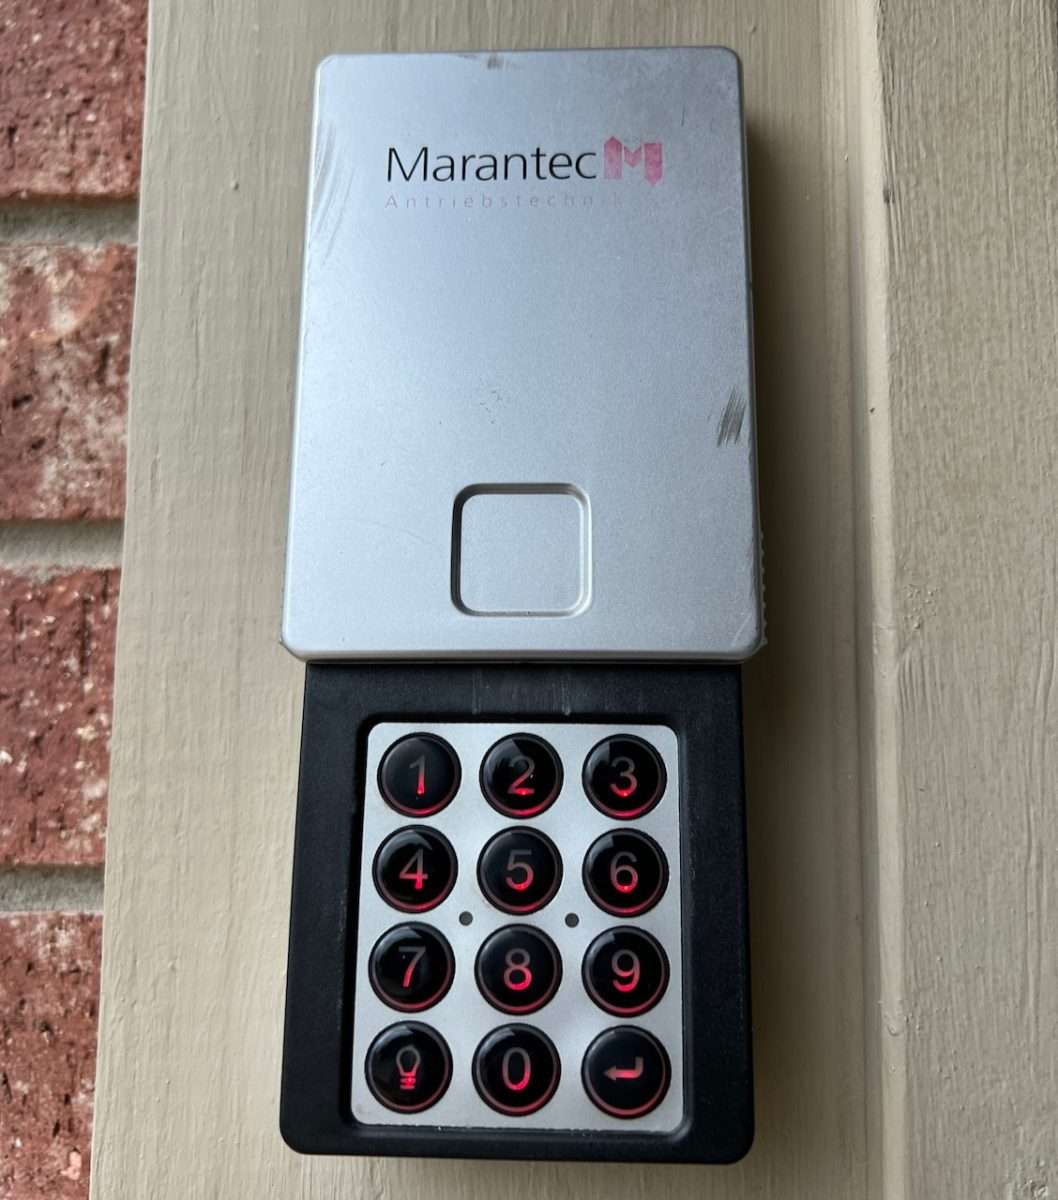 Marantec outdoor wireless keypad.